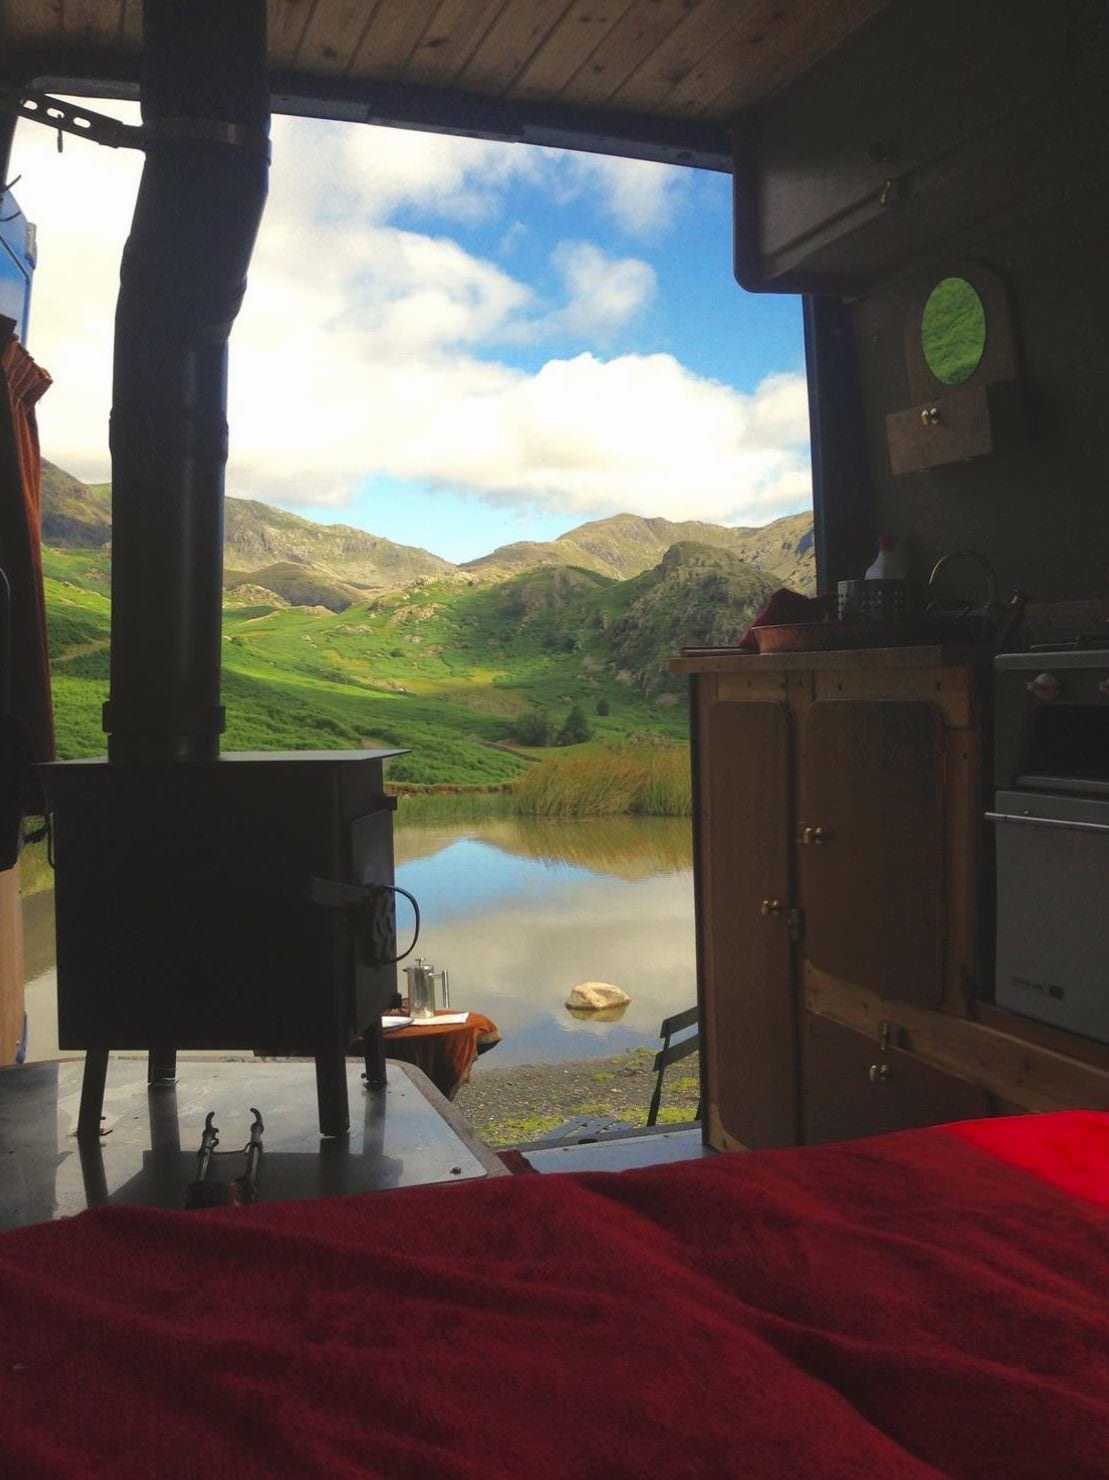 stunning views from elvira campervan on an adventure